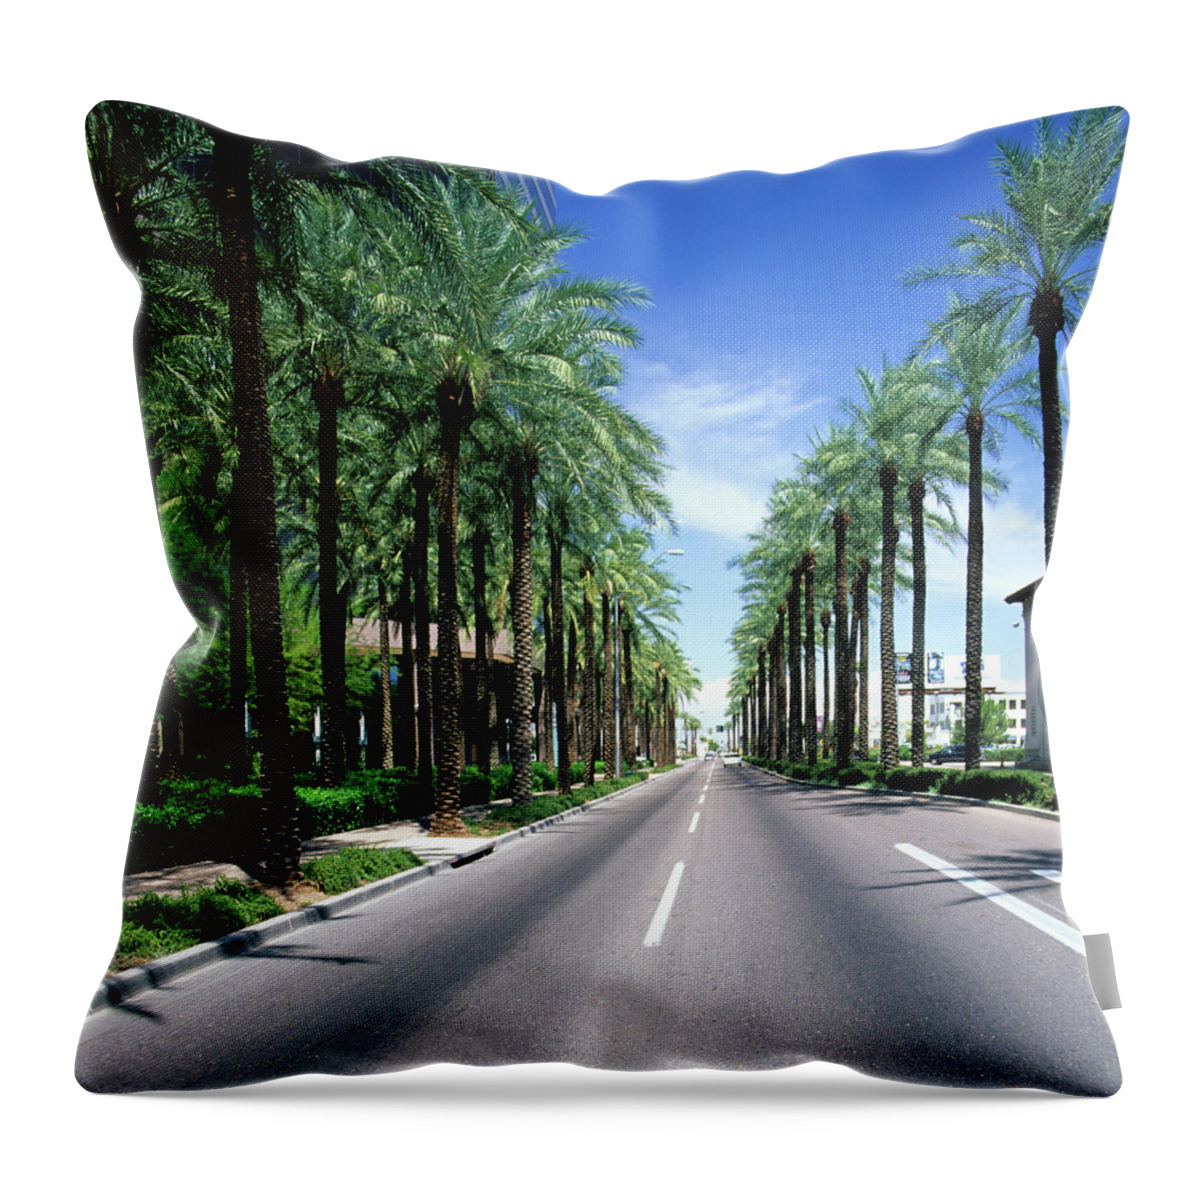 Scenics Throw Pillow featuring the photograph Palm Tree Lined Street, Phoenix, Arizona by Hisham Ibrahim